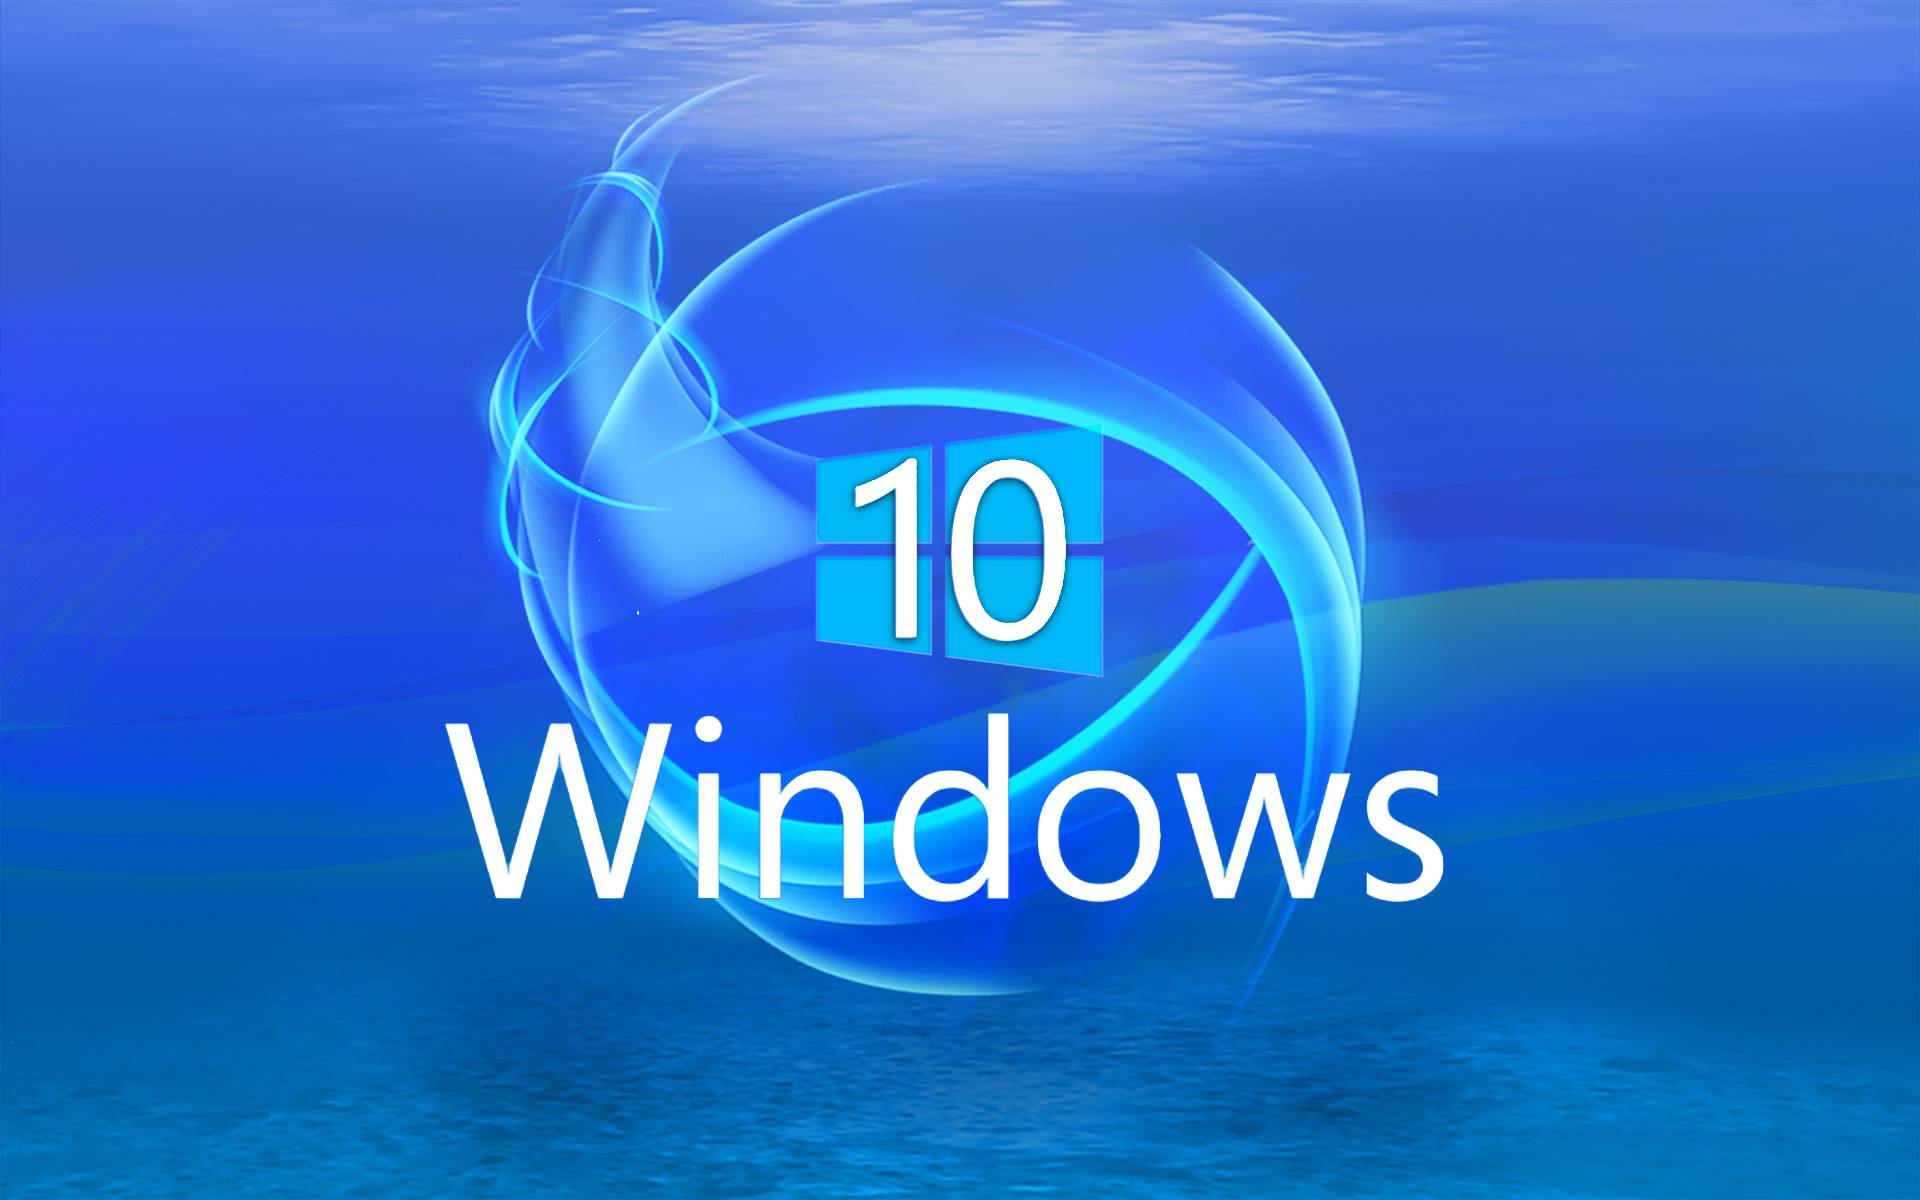 Фото На Экран Блокировки Windows 10